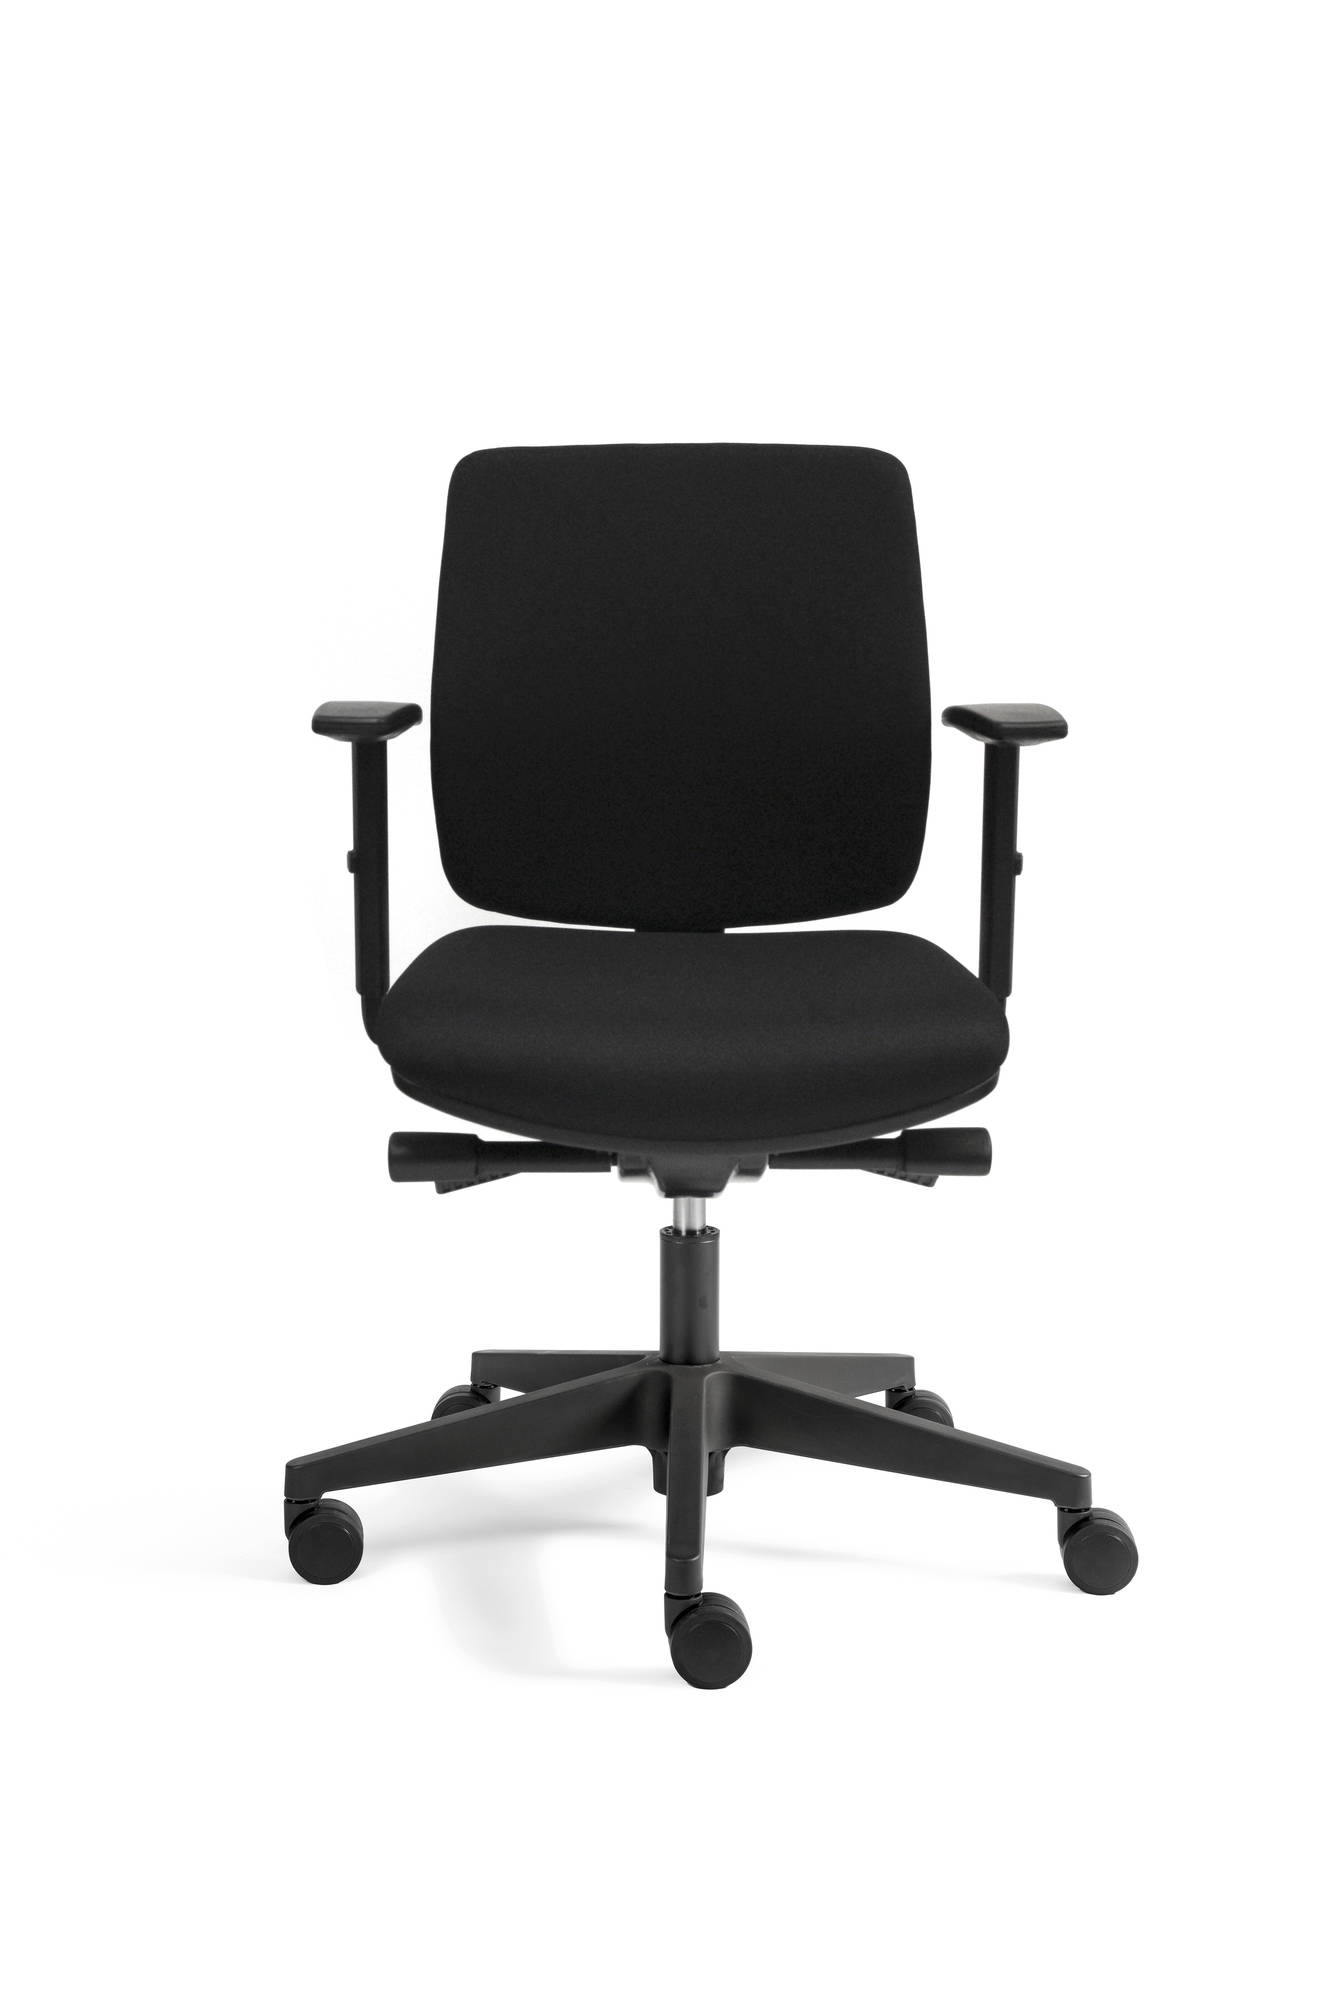 Office chair ergonomic black Moli